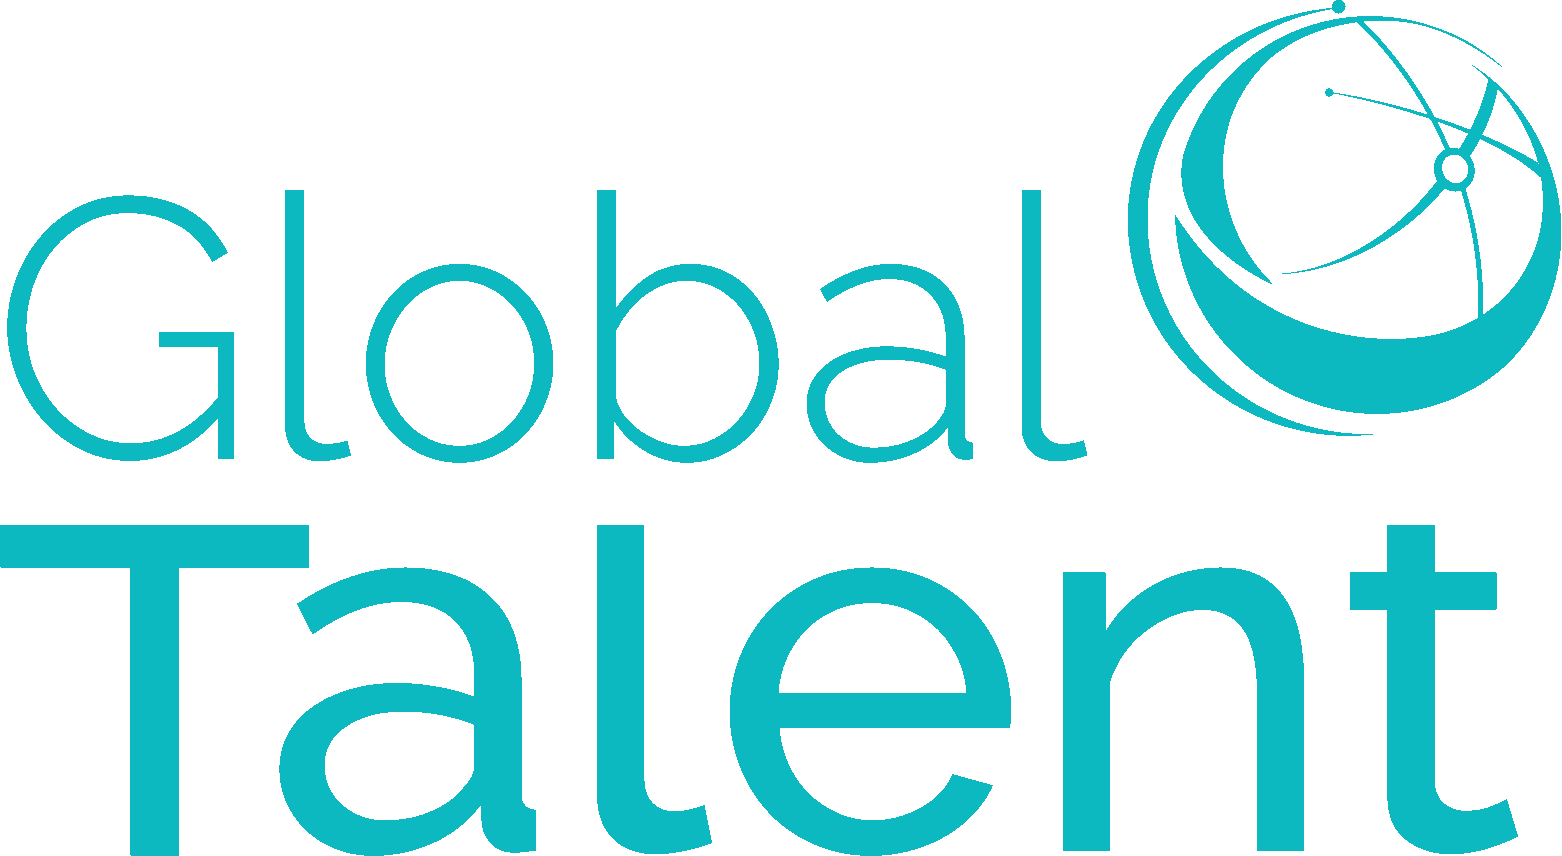 global talent program